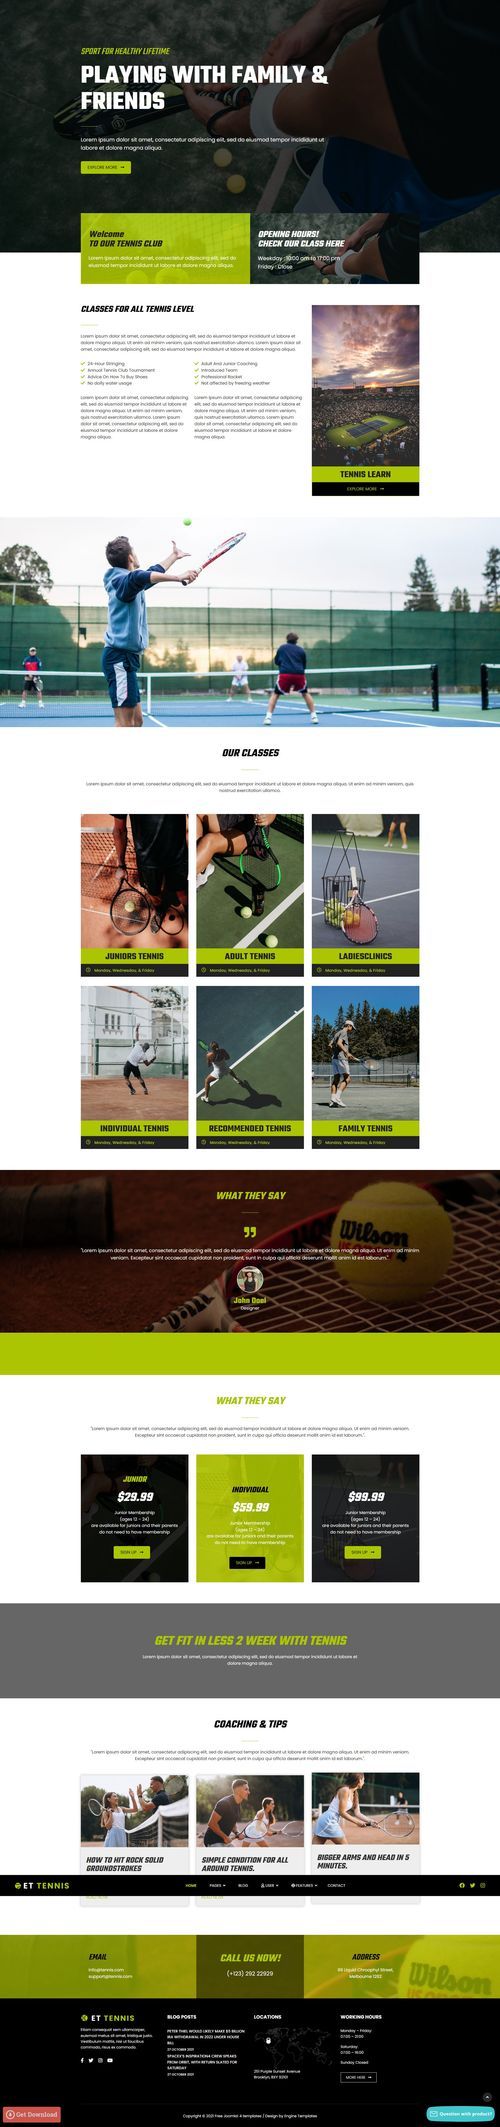 ET Tennis - Tennis Academy or Tennis Club Joomla 4 Template